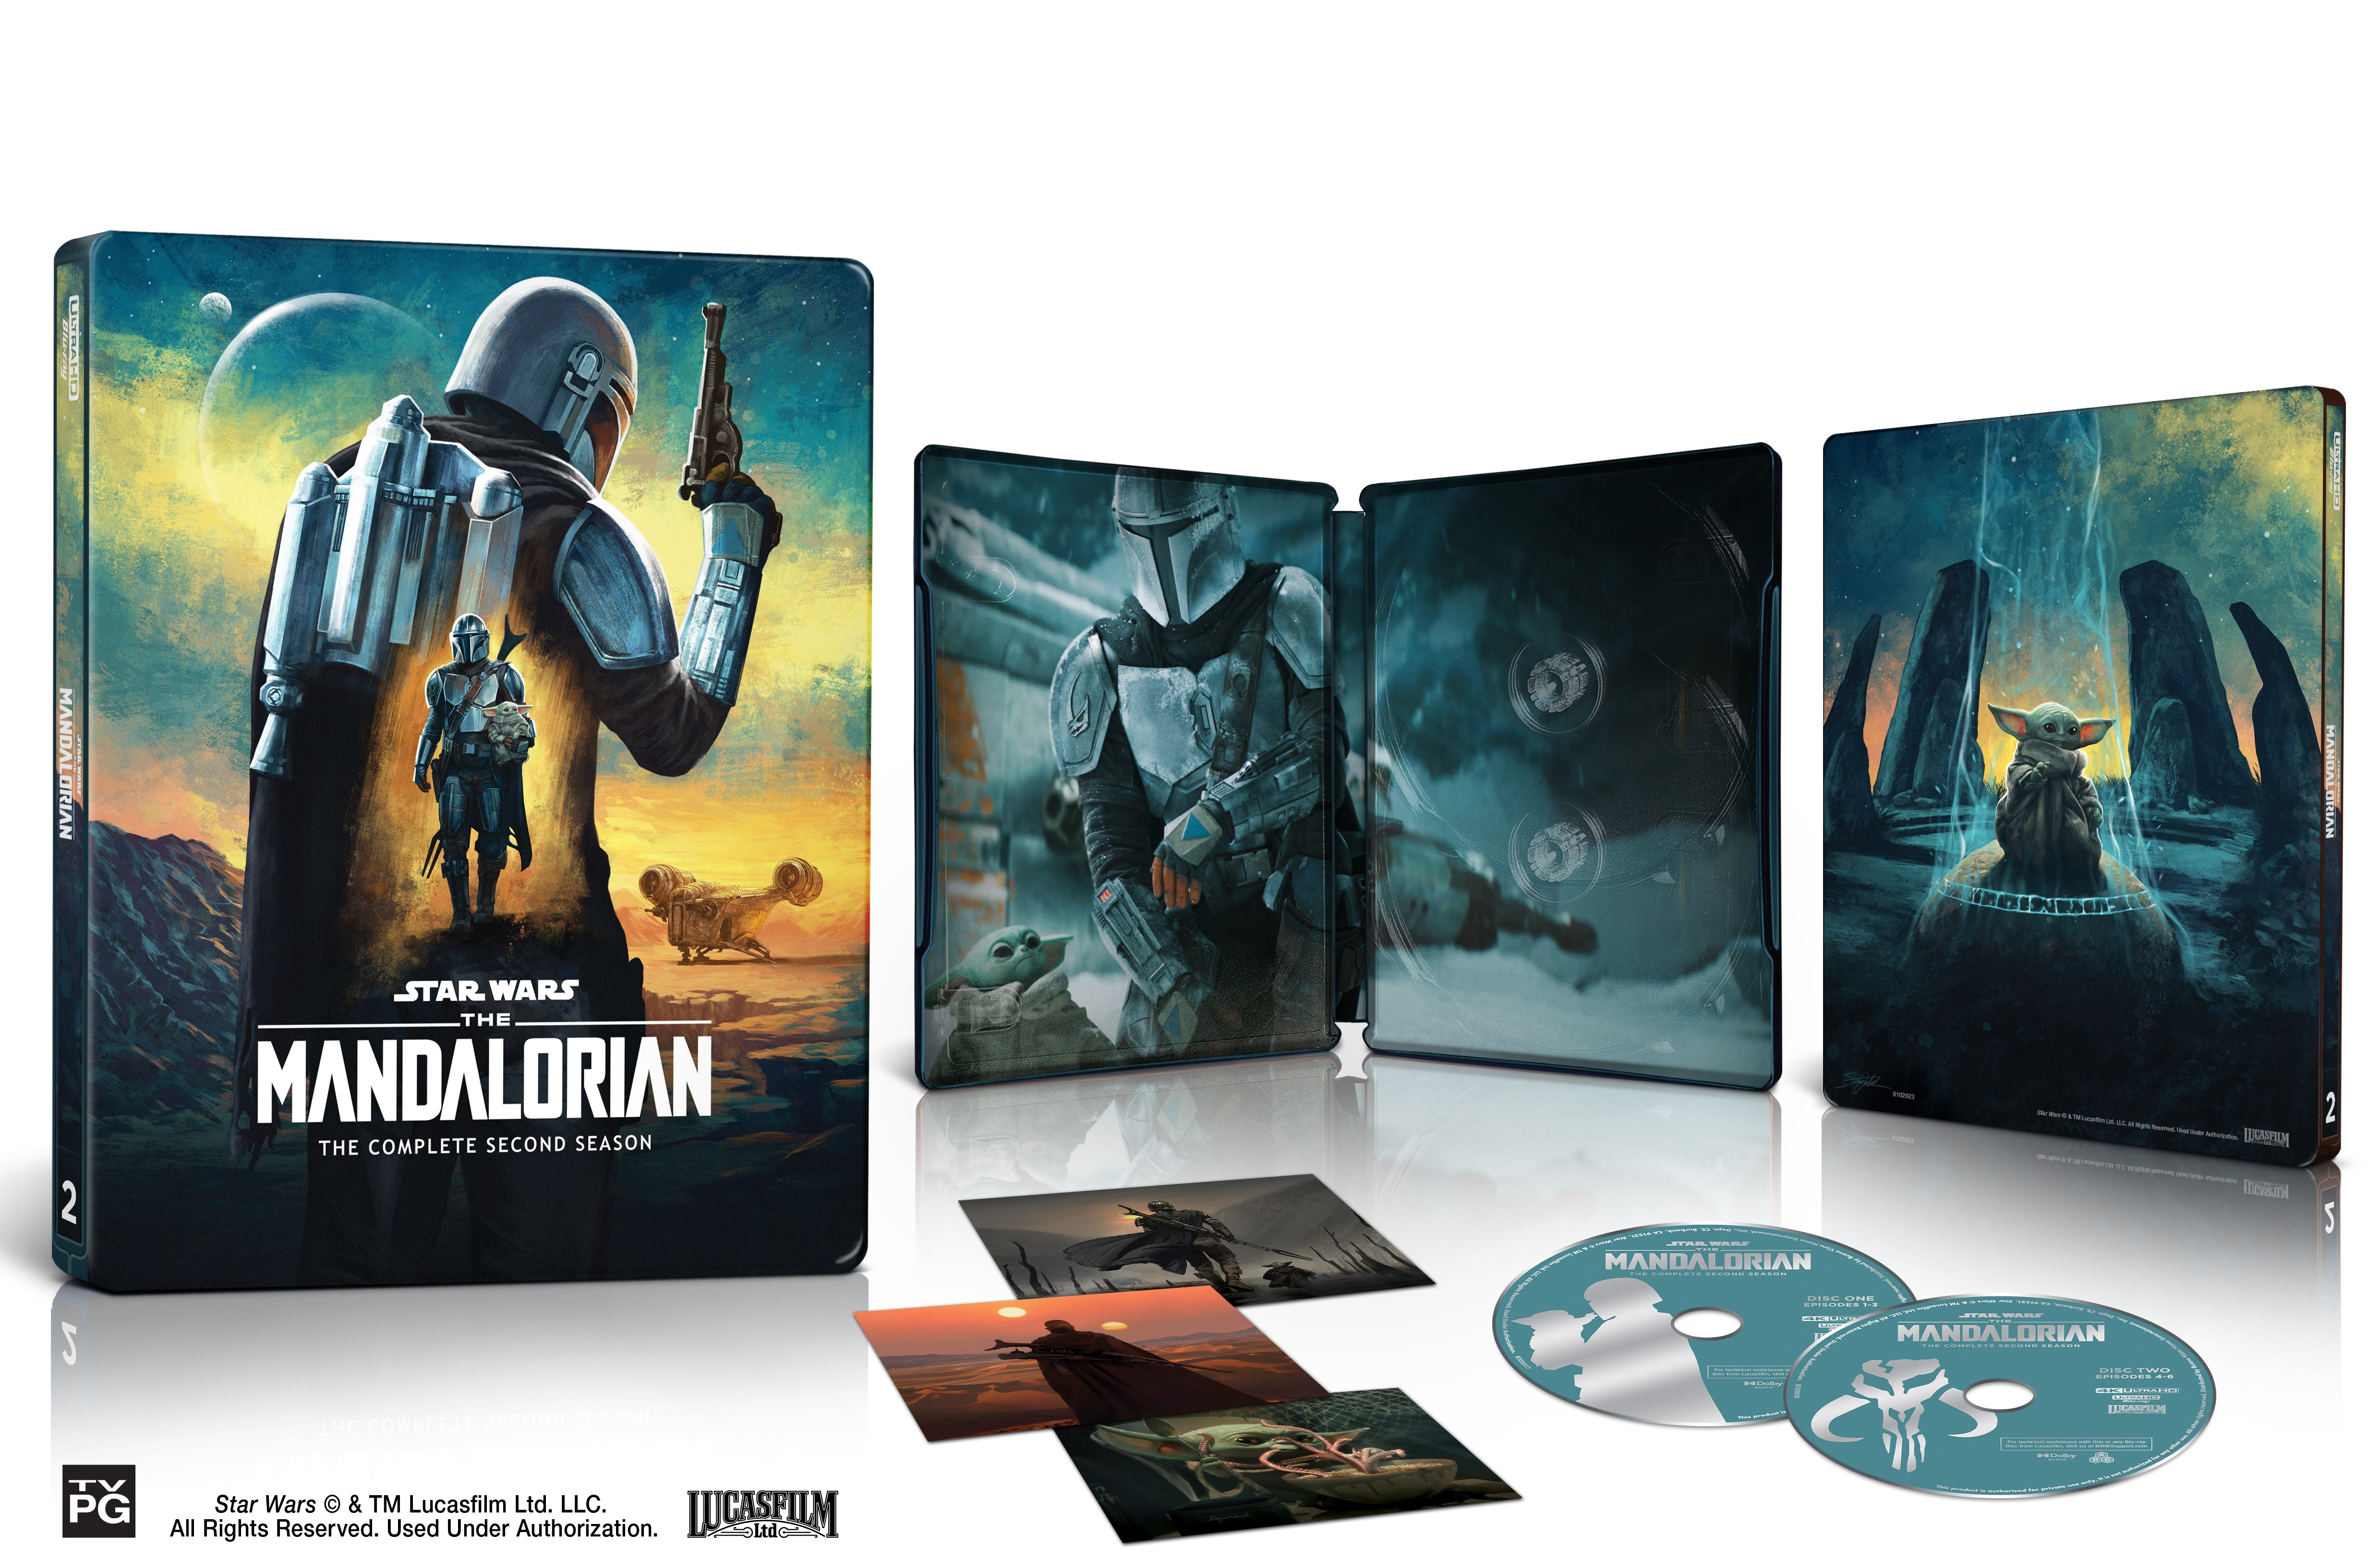 The Mandalorian: The Complete Second Season (Steelbook) 4K Ultra HD - image 2 of 3